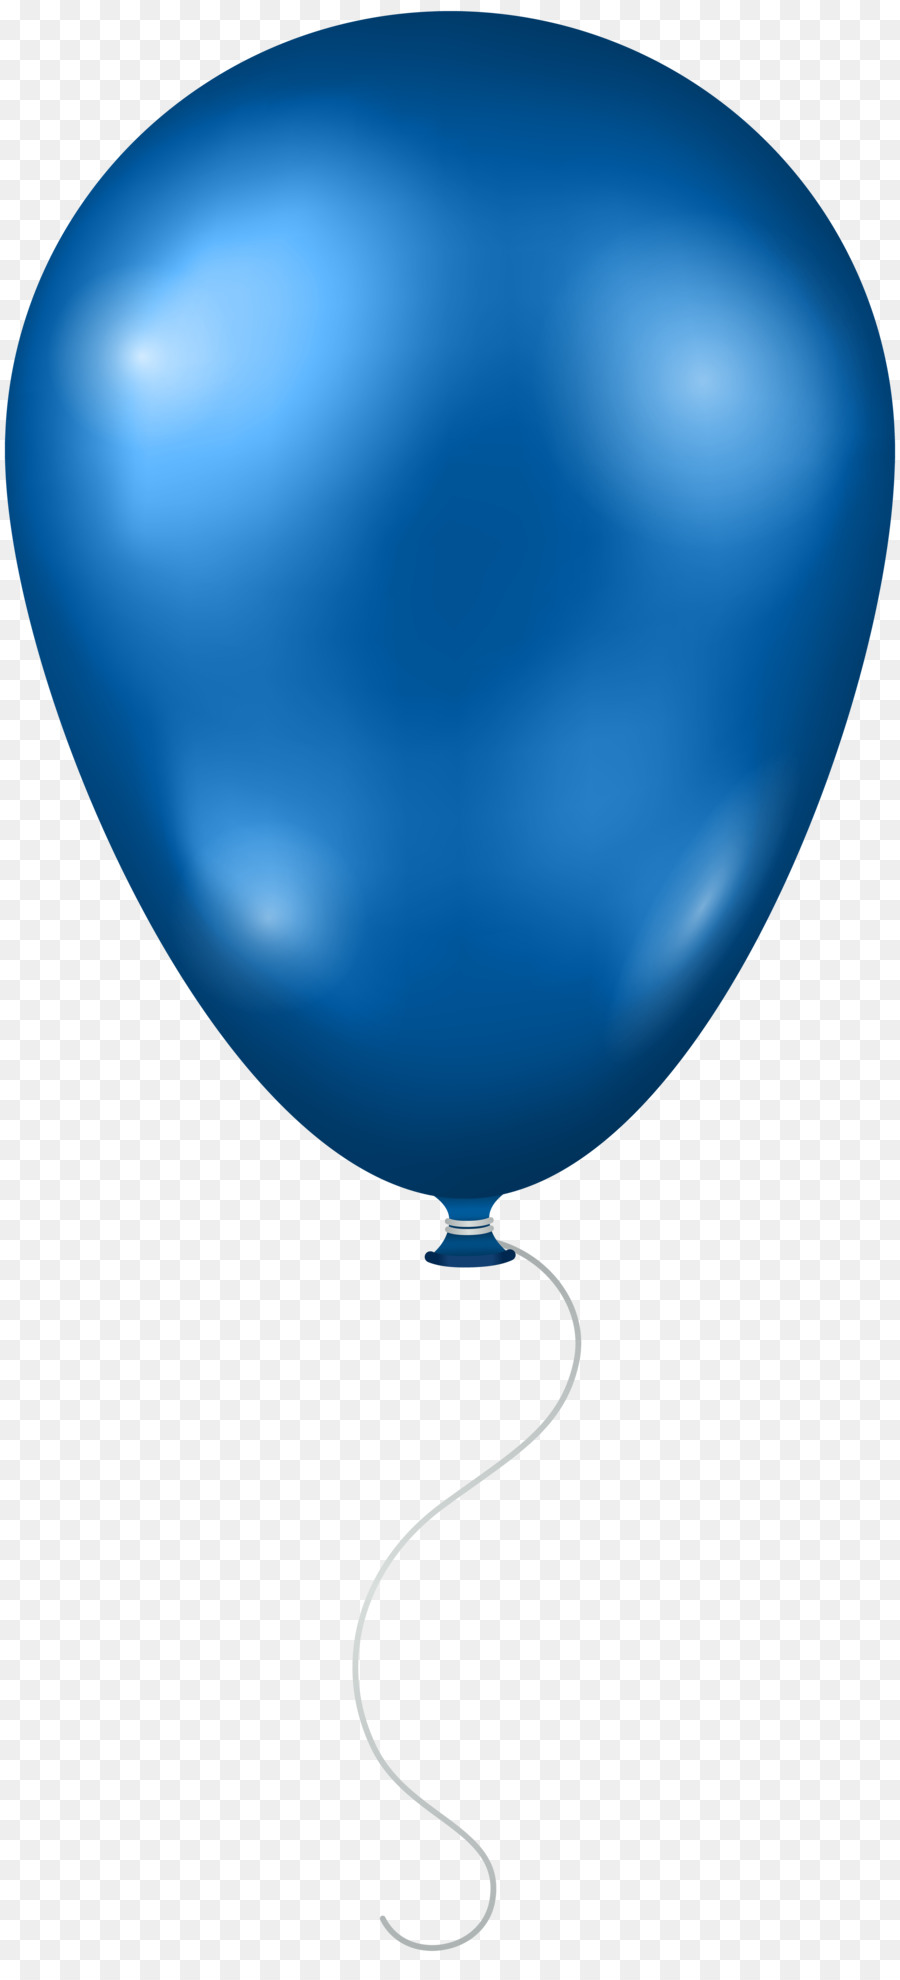 Birthday Balloon Cartoon Png Download 3670 8000 Free Transparent Balloon Png Download Cleanpng Kisspng